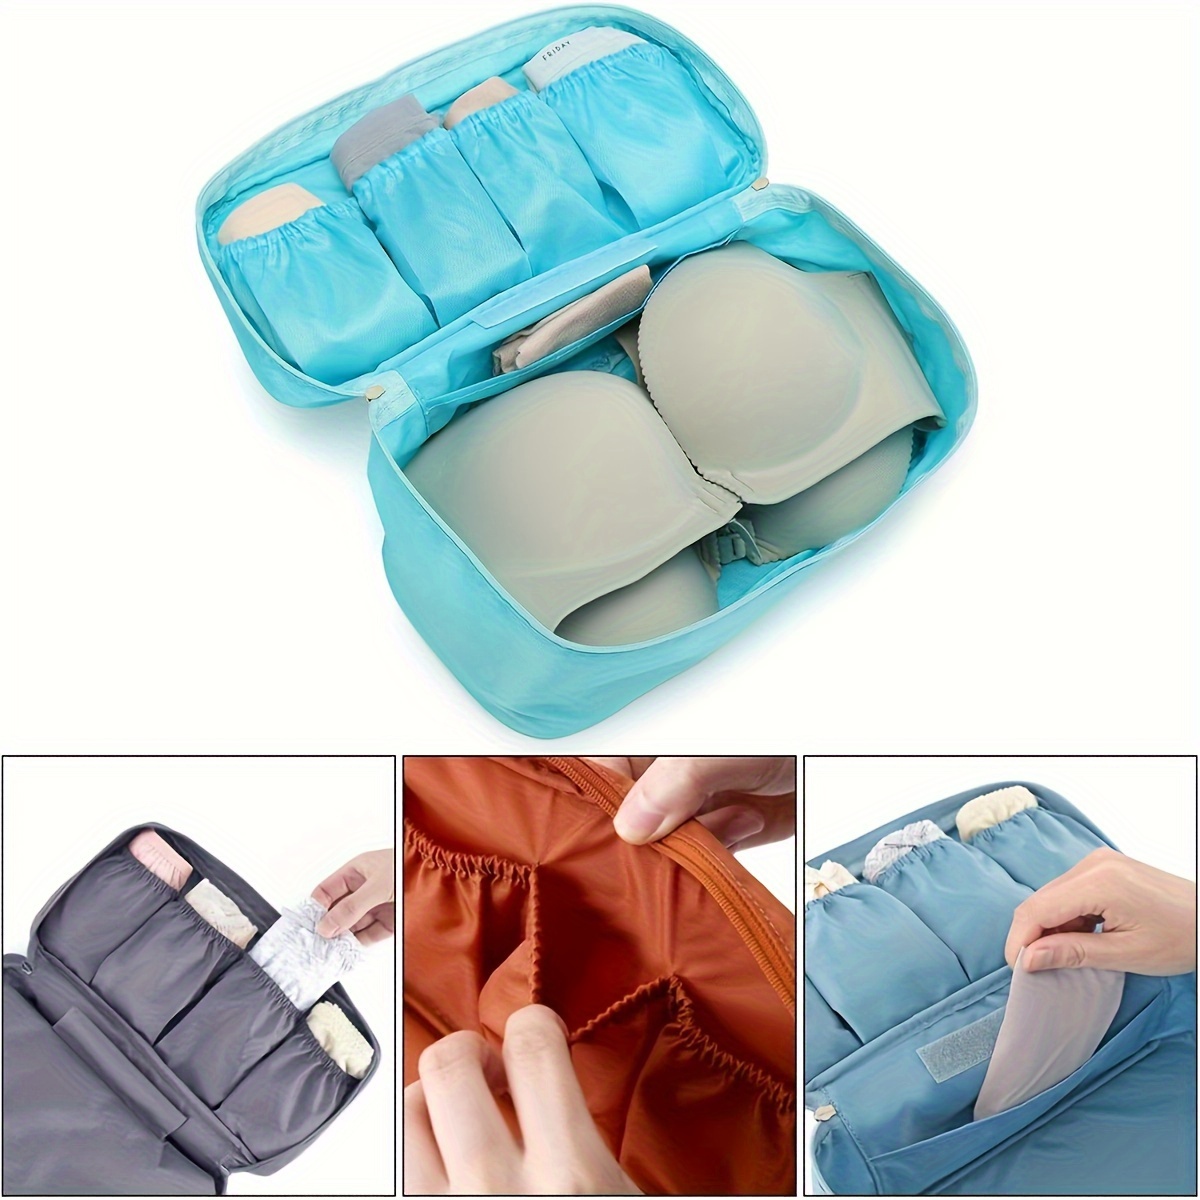 Travel Organizer bra bag/Lingerie/Panties/ - Portable Travel